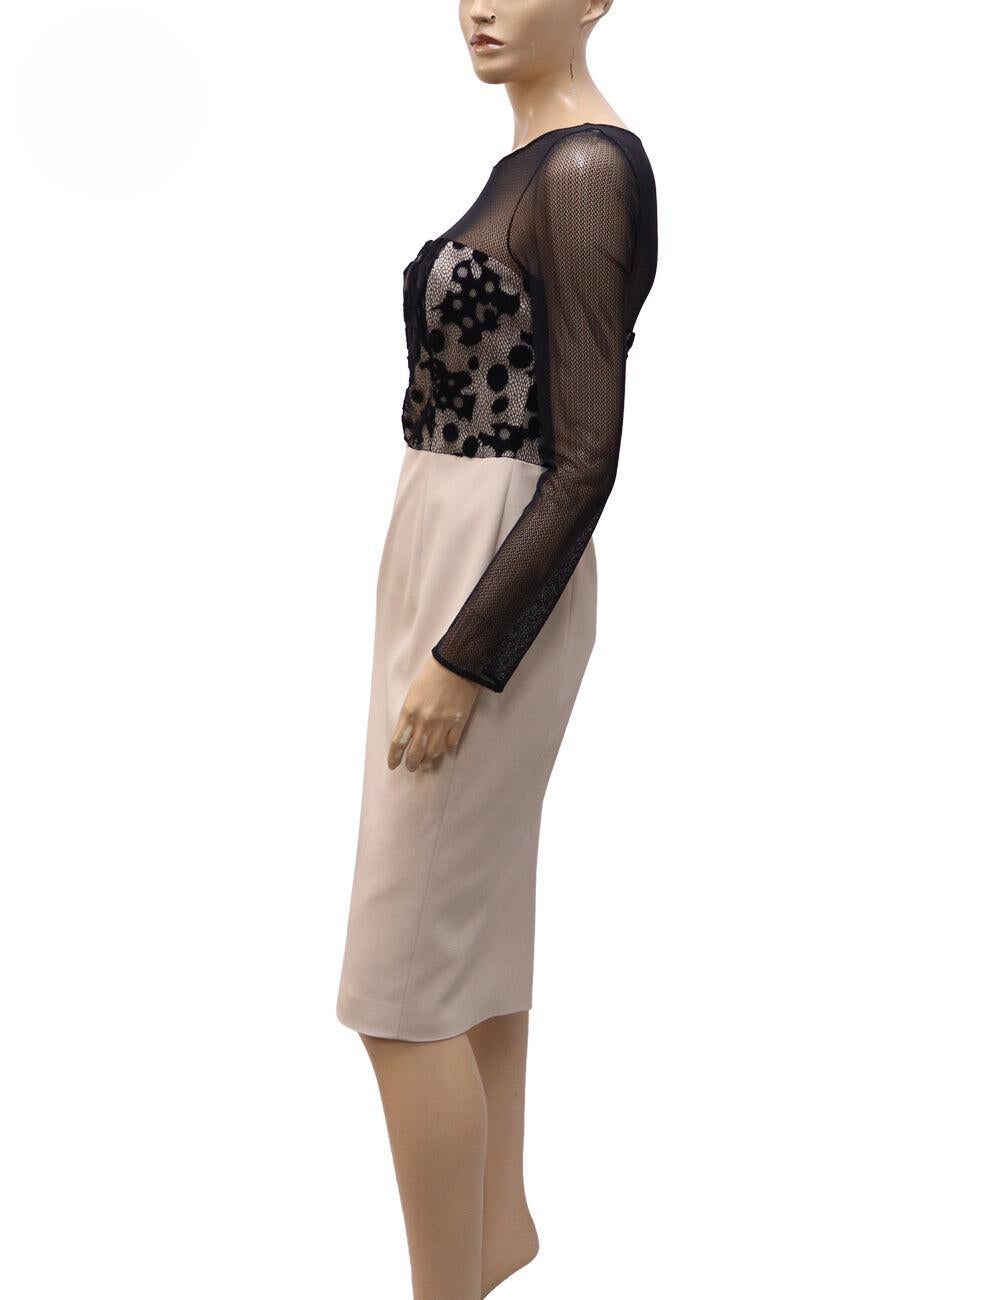 Karen Millen Black & Beige Fishnet Overlay Sheath Dress.

Material: 65% Acetate 31% Polyamide 4% Elastane 
Size: EU 40 / UK 12 / US 8
Bust: 93cm
Waist: 75cm
Hip: 101cm 
Condition: Excellent